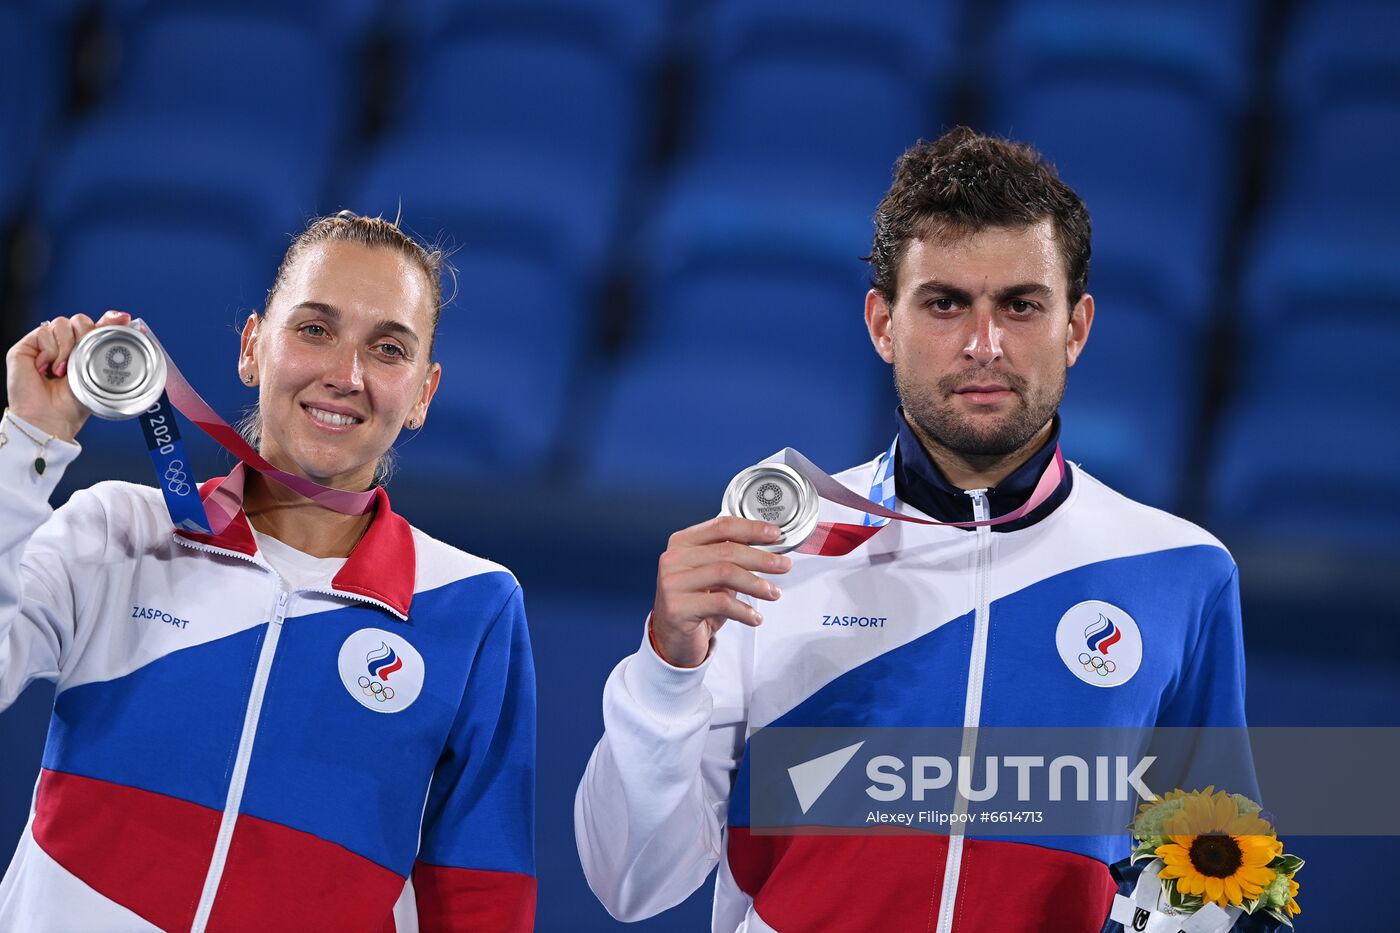 Japan Olympics 2020 Tennis Mixed Doubles Pavlyuchenkova/Rublev - Vesnina/Karatsev